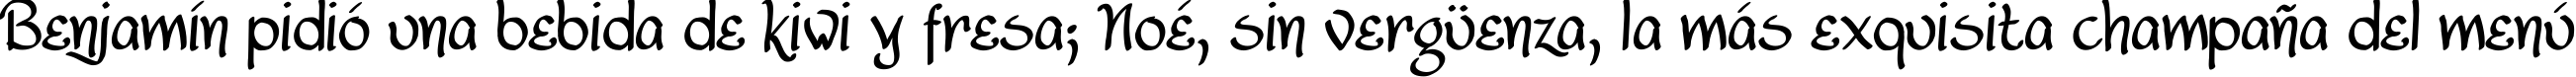 Пример написания шрифтом Lancastershire текста на испанском